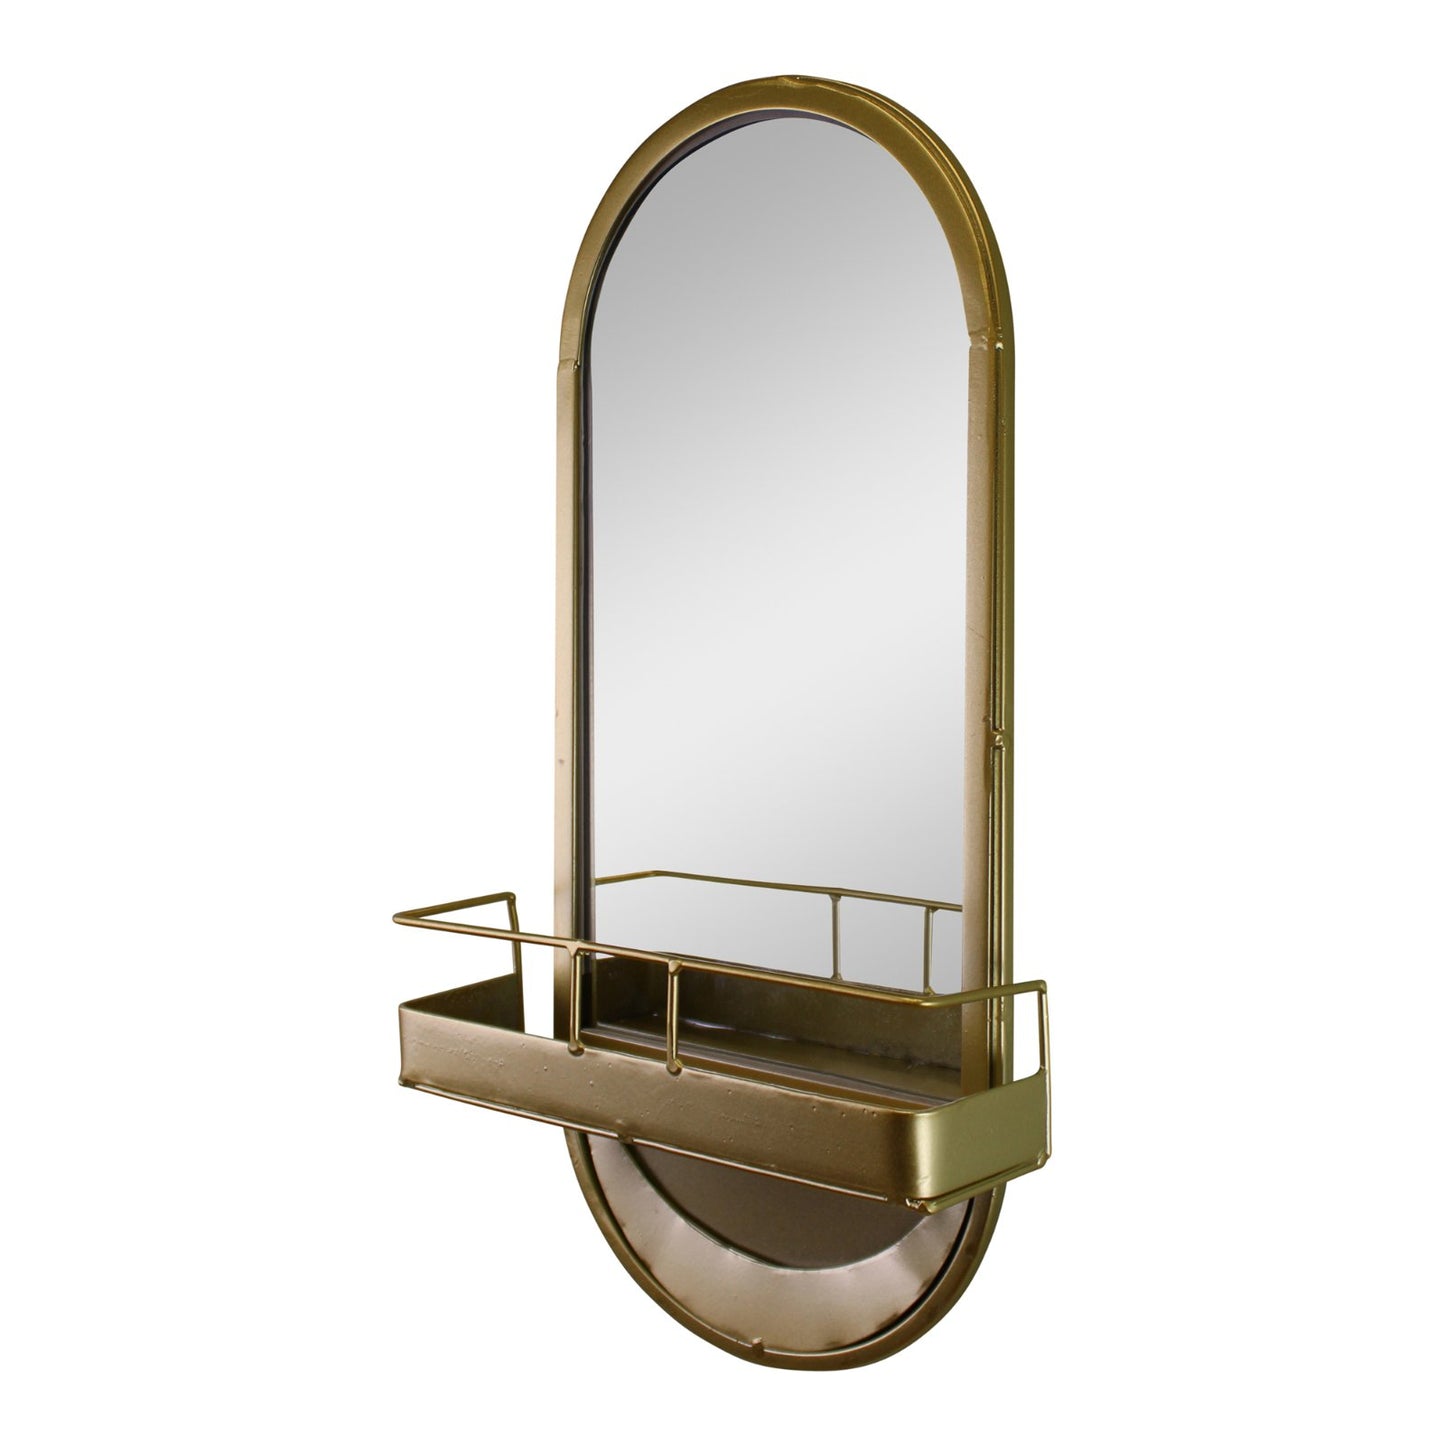 Arched Gold Metal Mirror With Storage Basket Shelf, 50cm